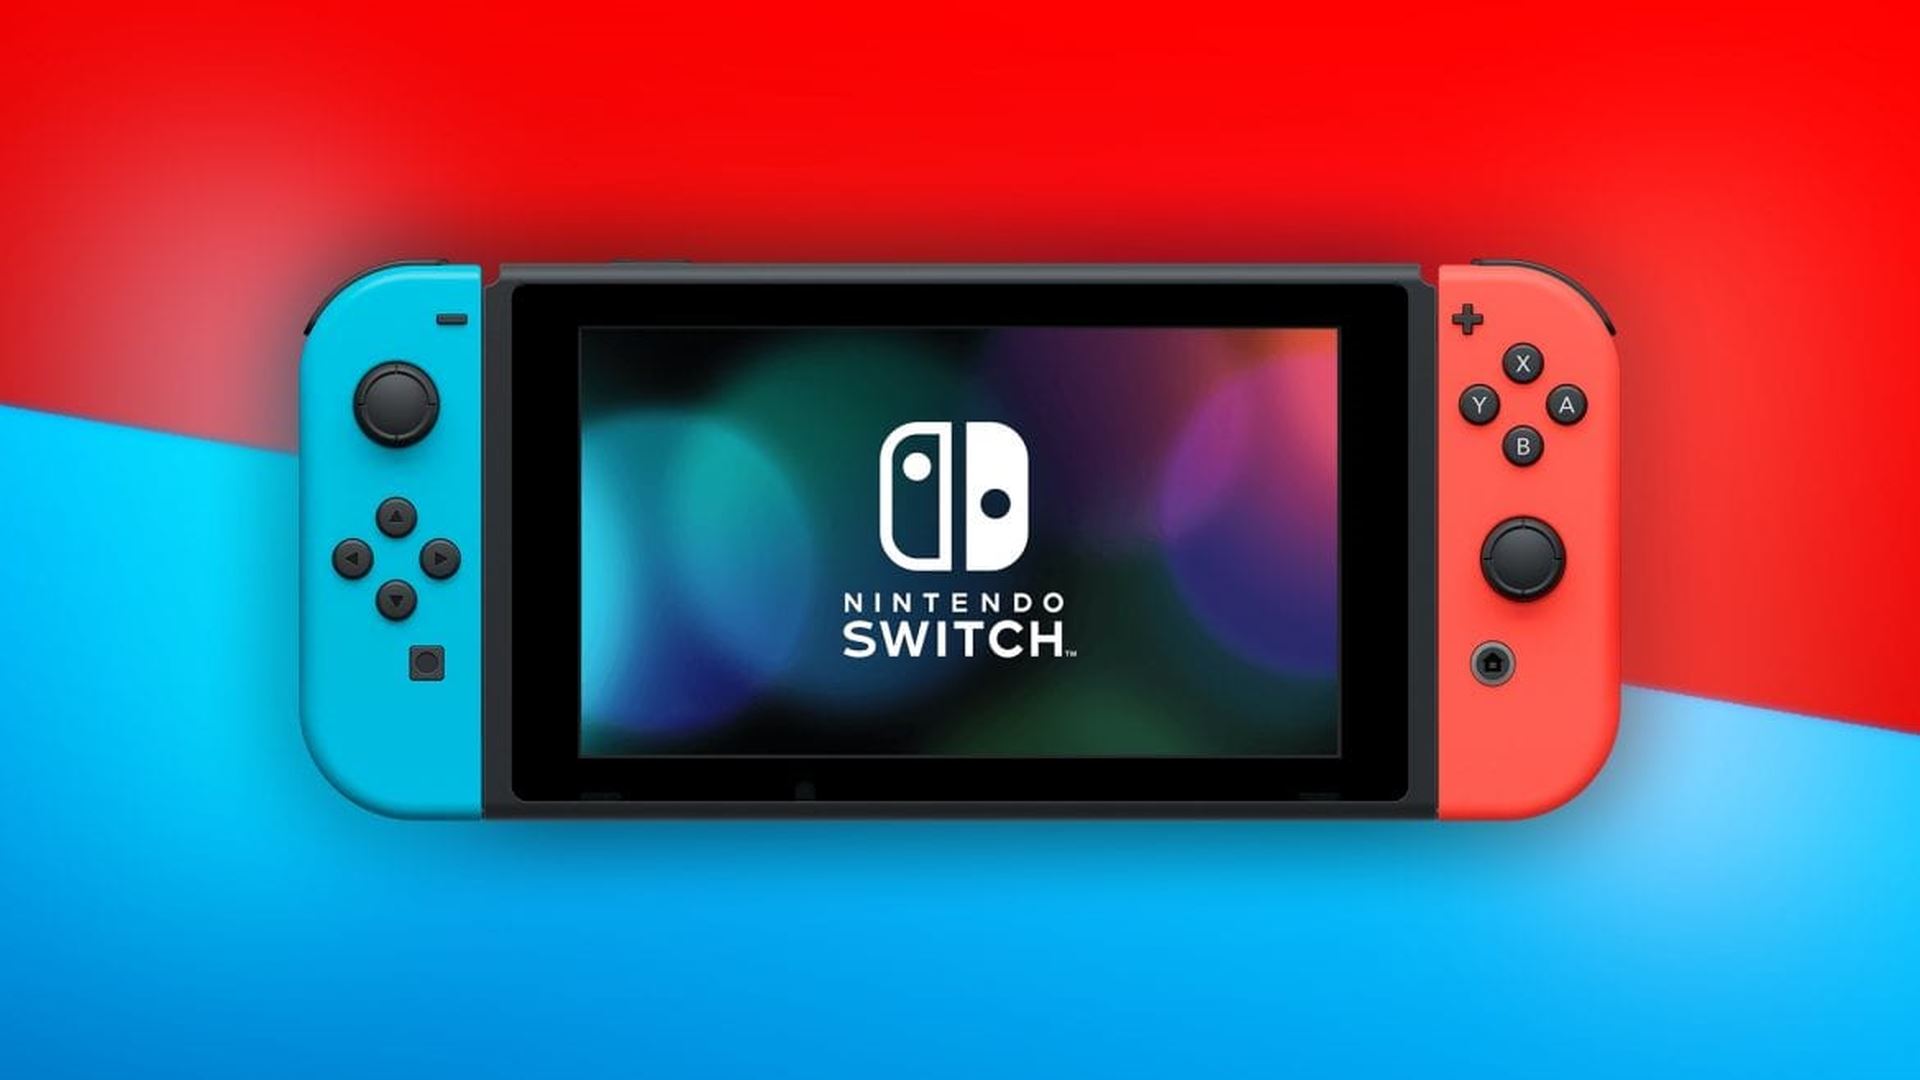 New titles Nintendo Switch